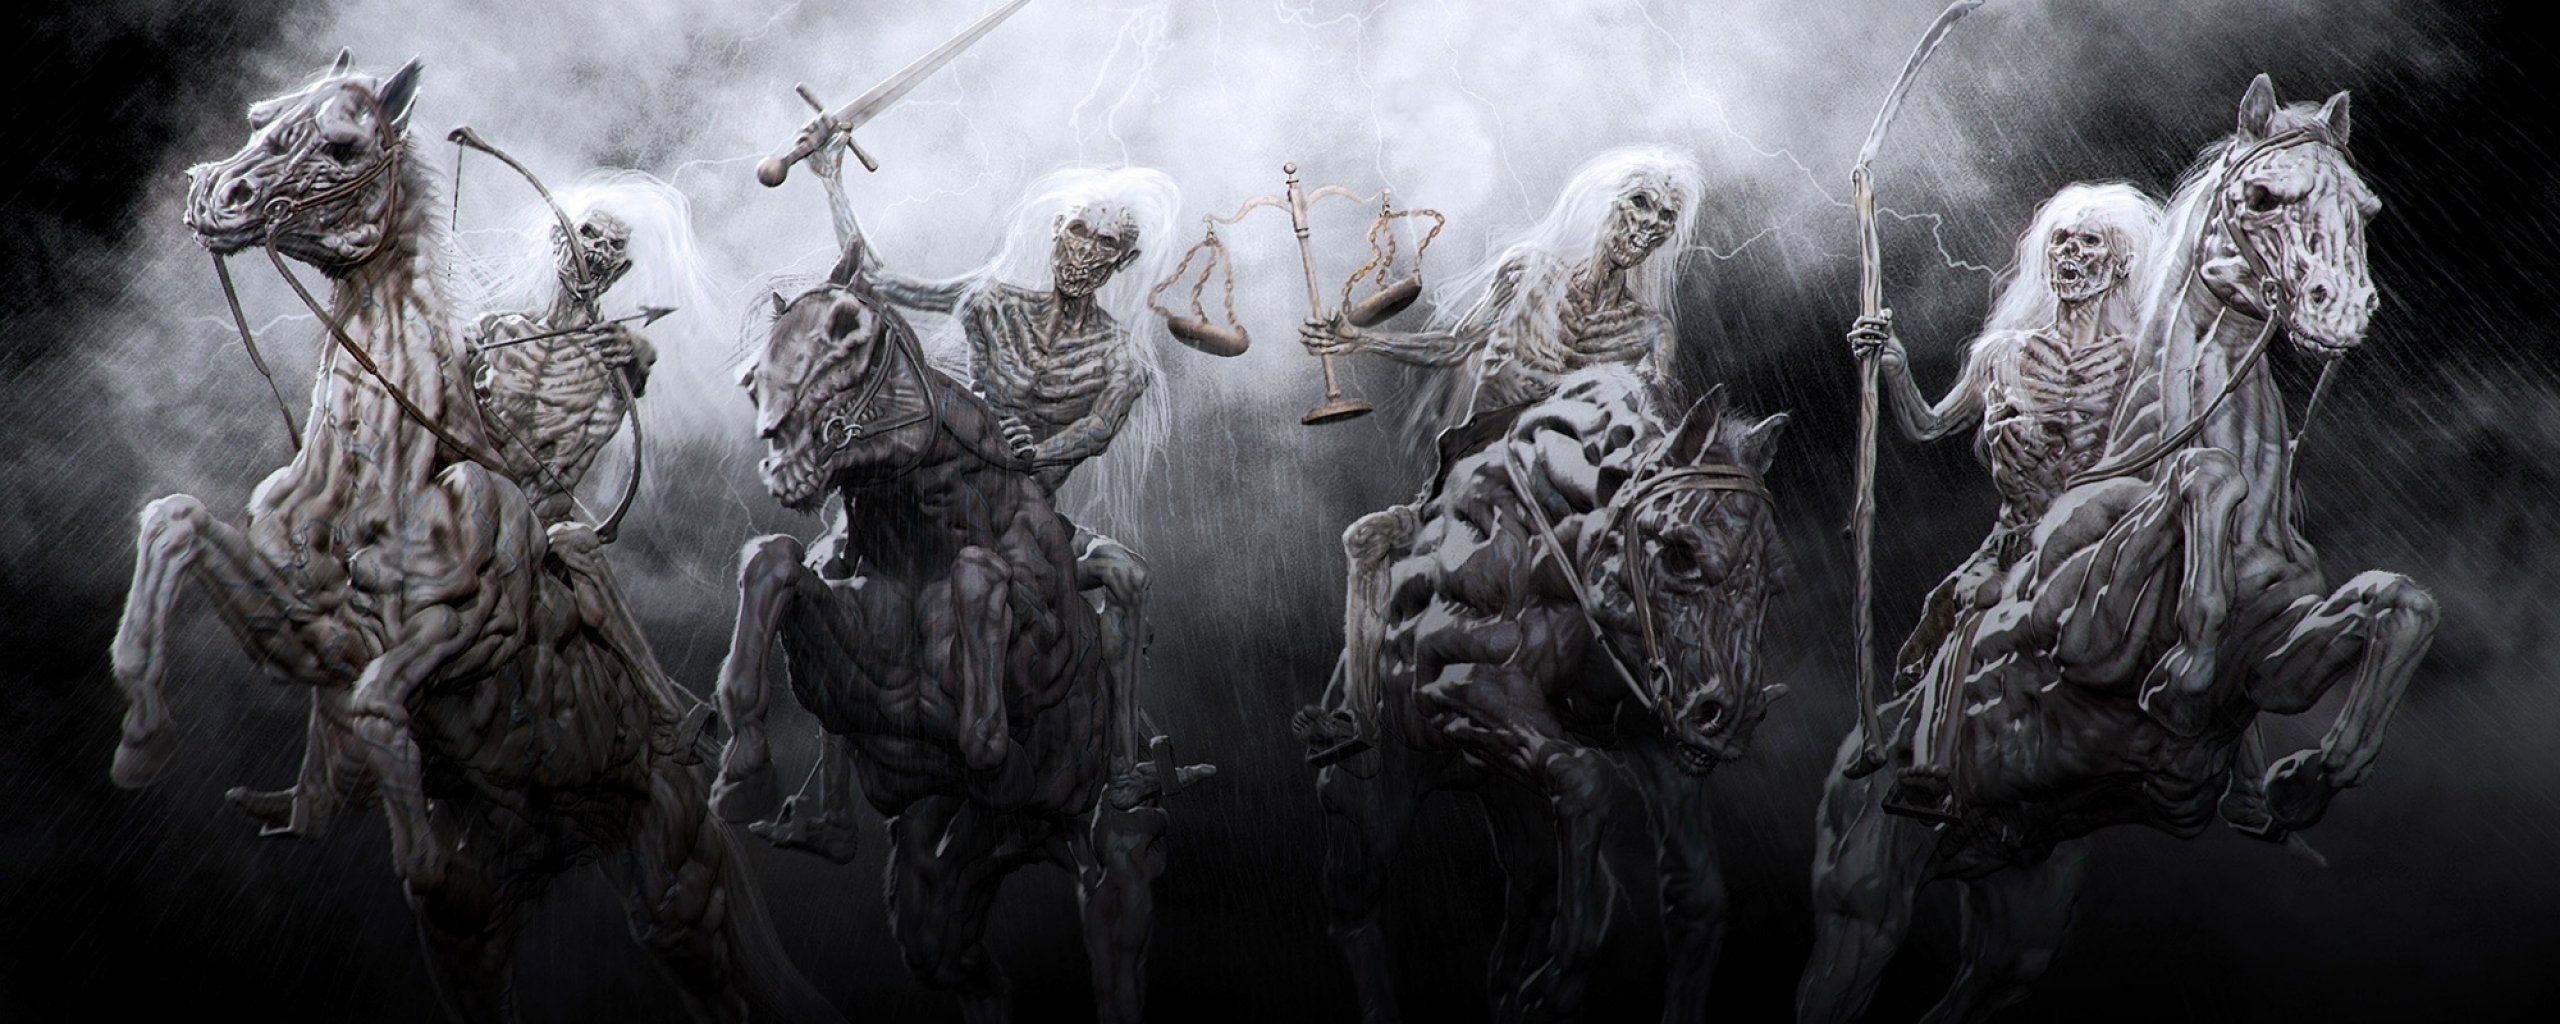 four horsemen of the apocalypse, armageddon, dark Square Wallpapers